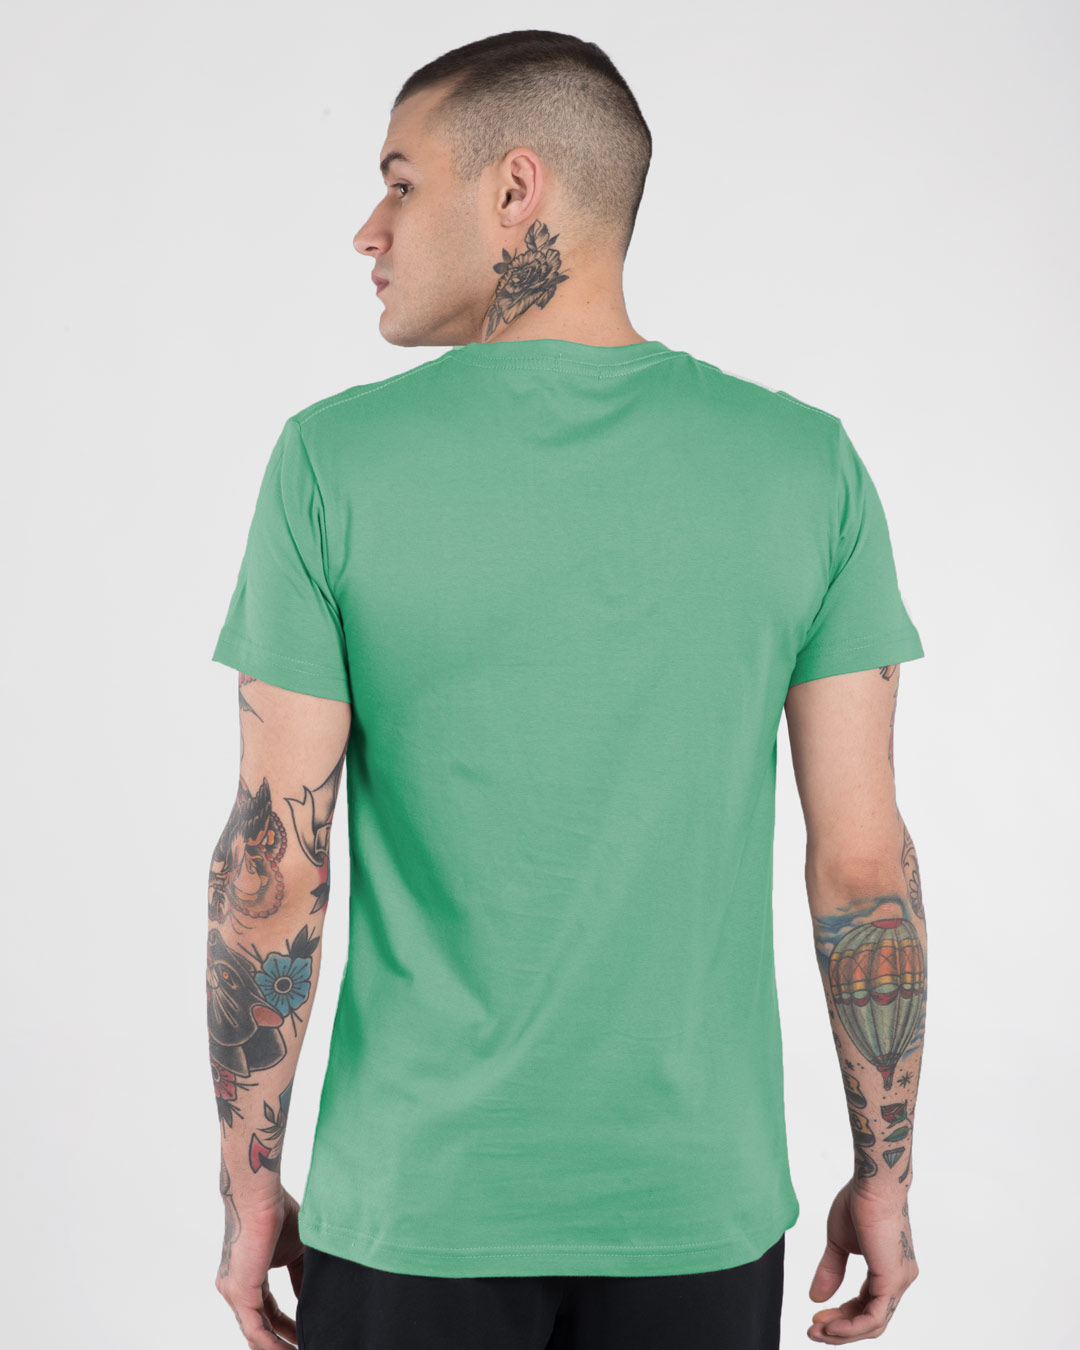 Shop Outdoors ON Half Sleeve T-Shirt Jade Green -Back